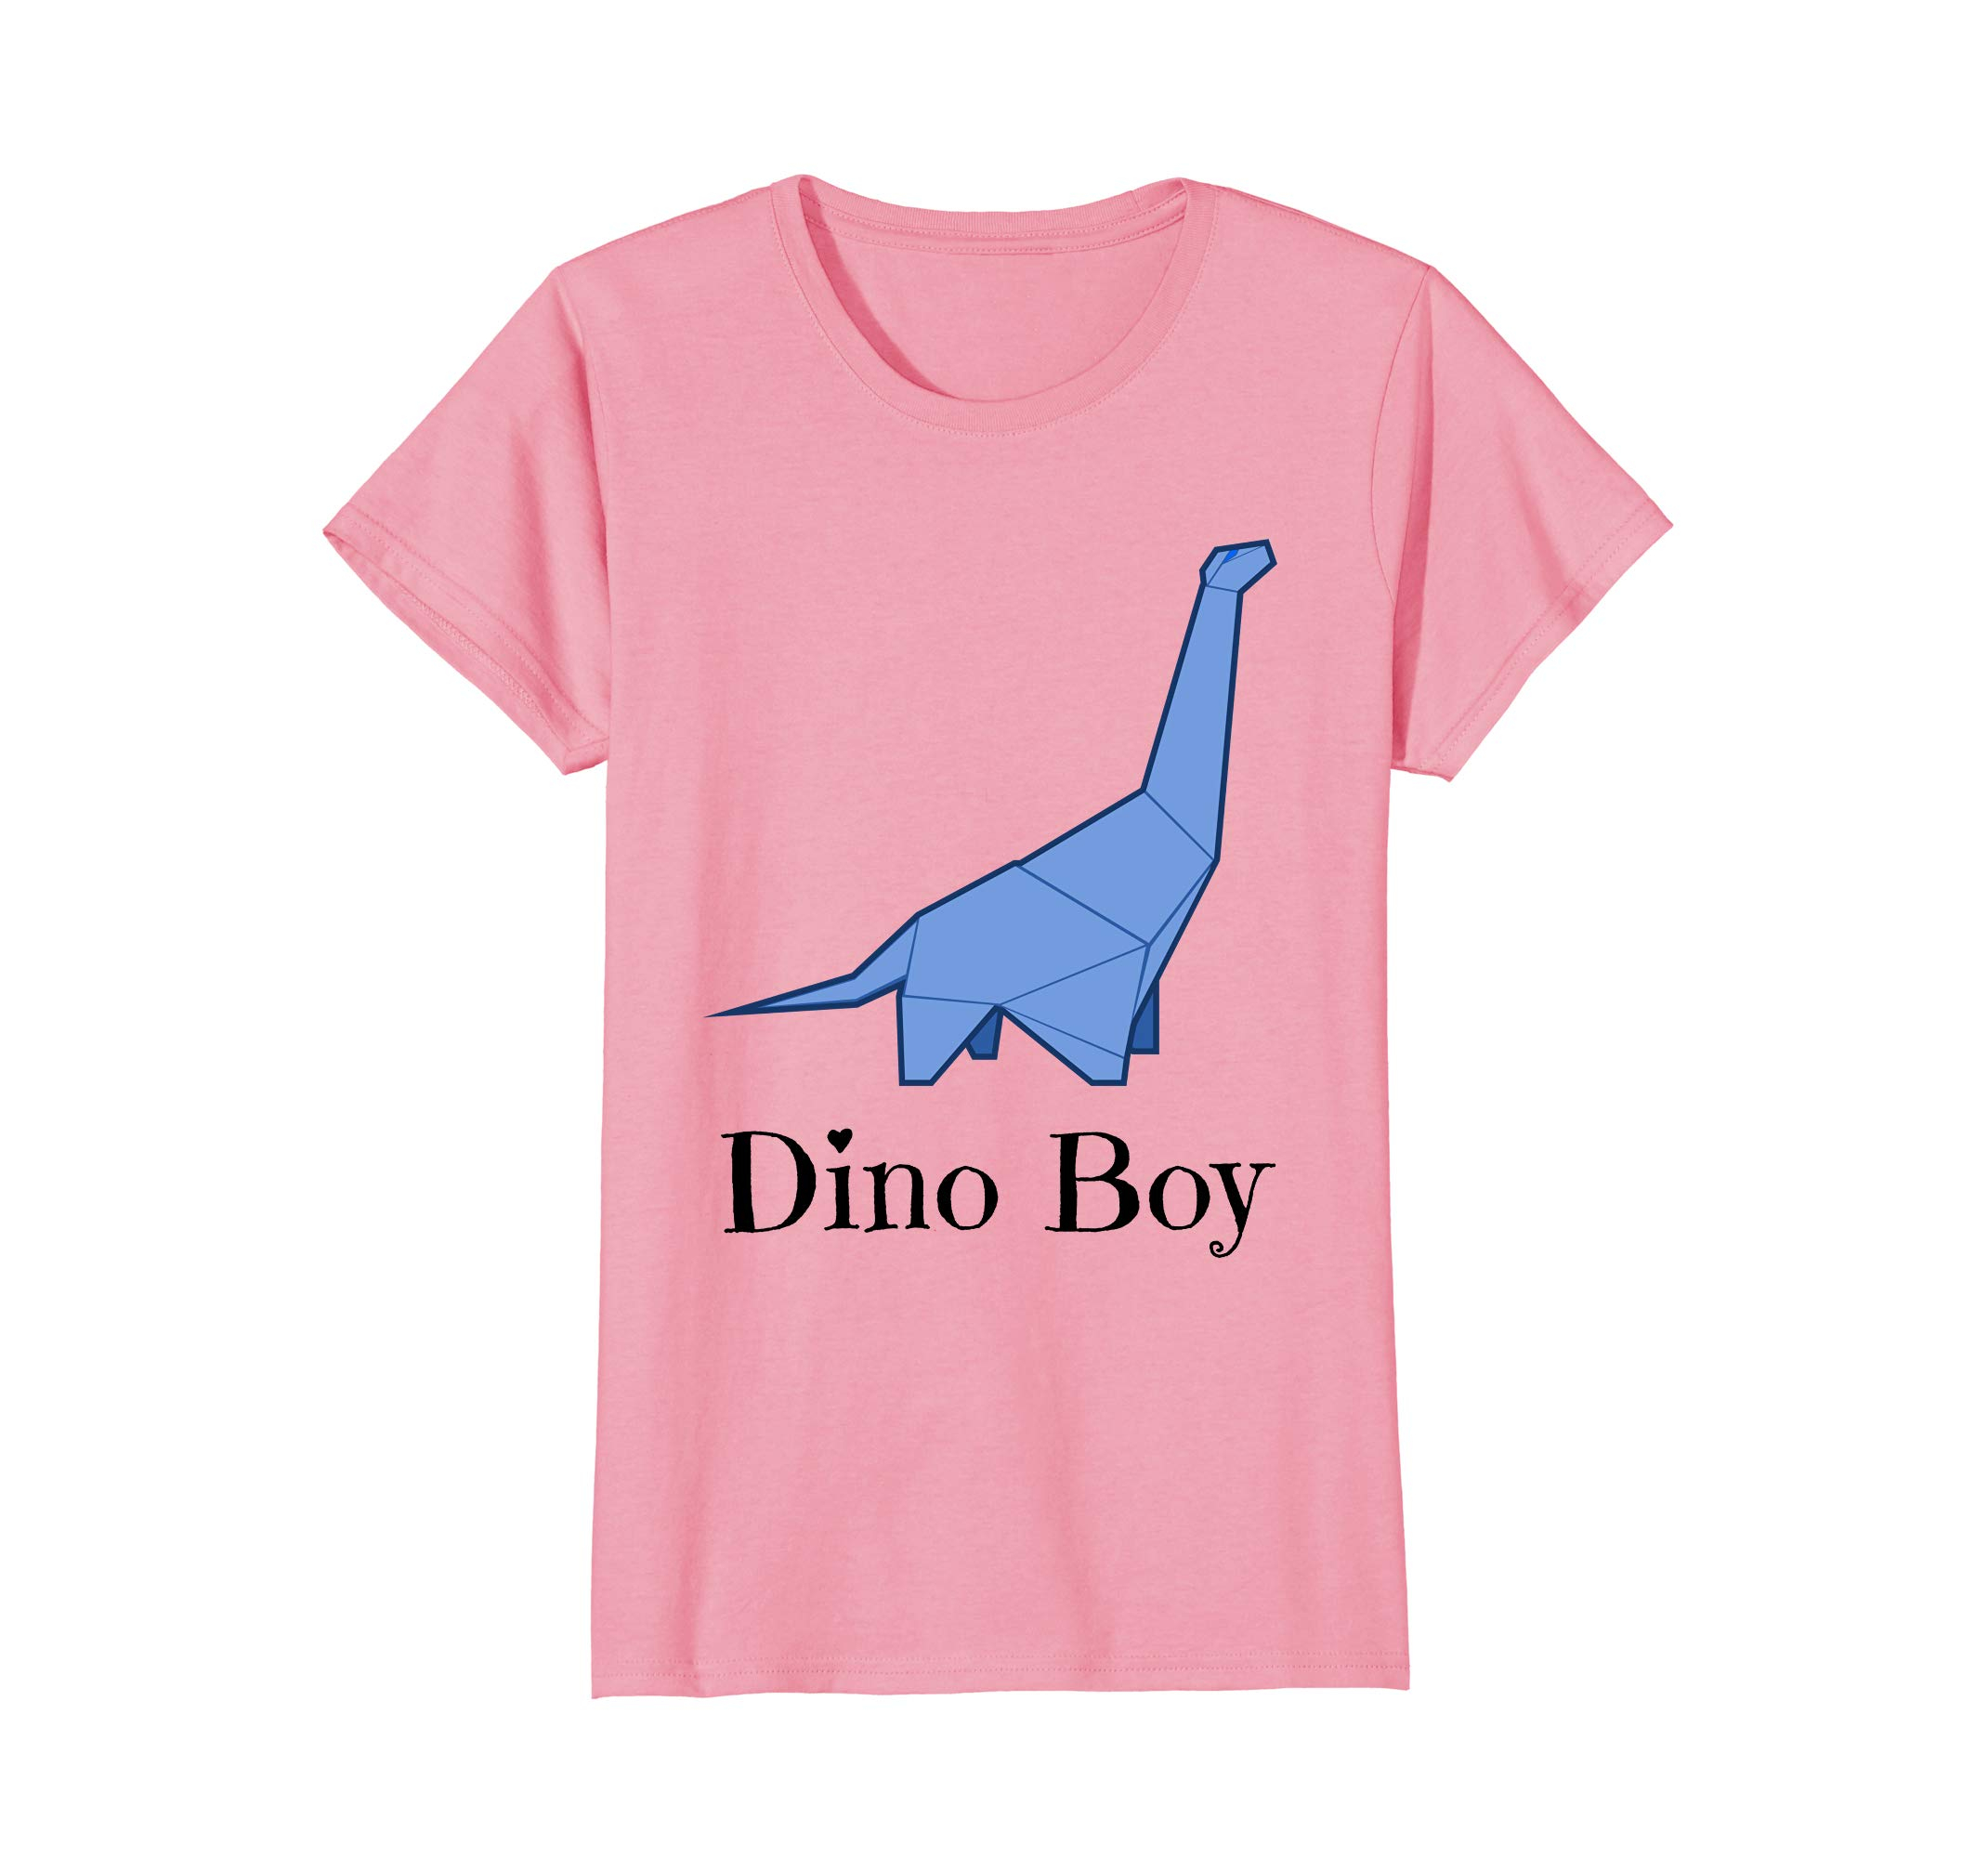 Origami For Kids Clothes Dino Boy T Shirt T Rex Dinosaur Brachiosaurus Gift Tee